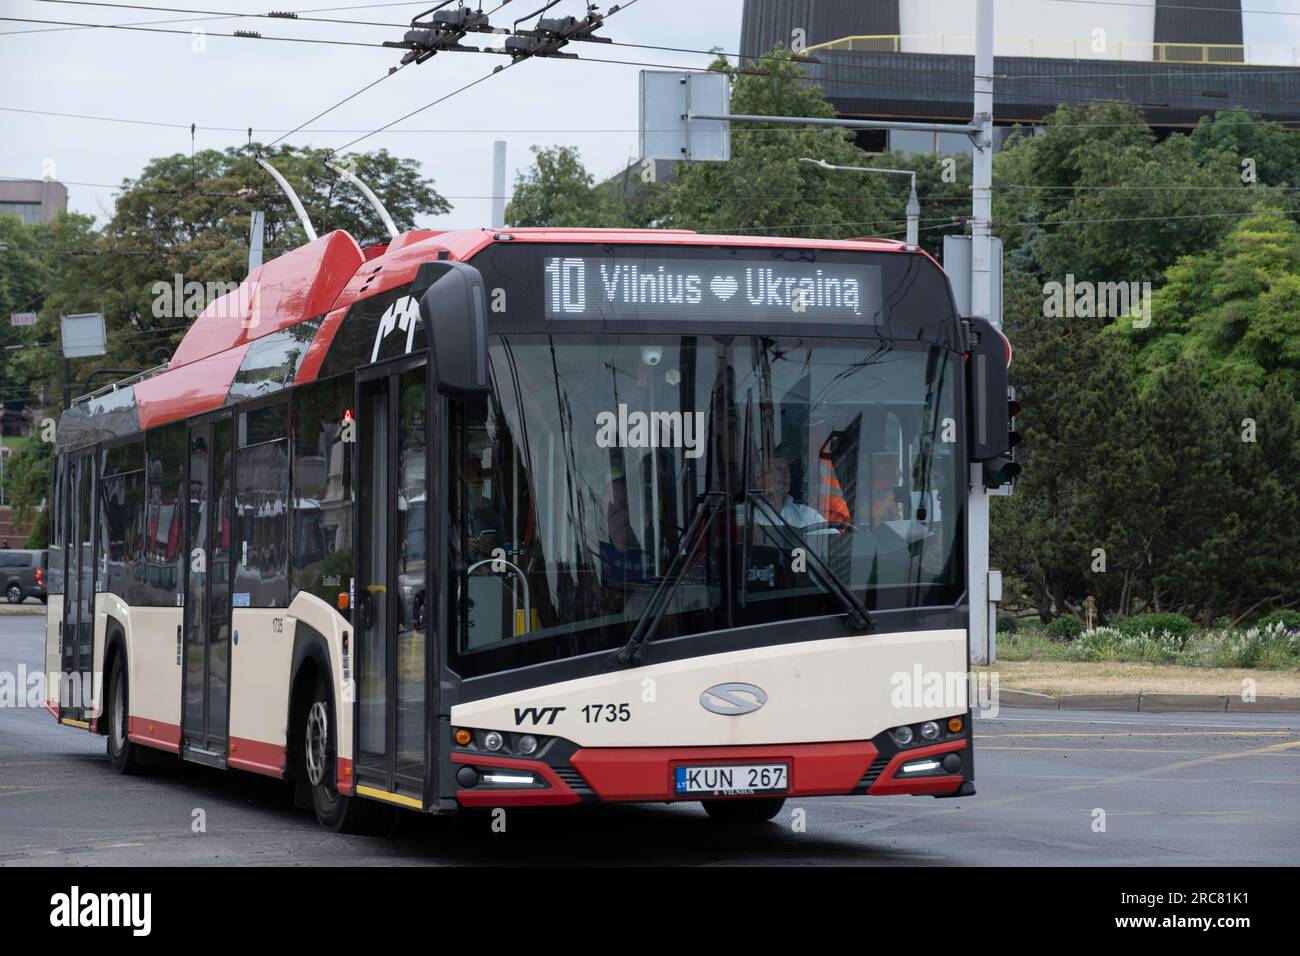 Skoda Trolley Bus in a street in Vilnius, Lithuania. Public Transport with text 'Vilnius loves Ukraina' Stock Photo